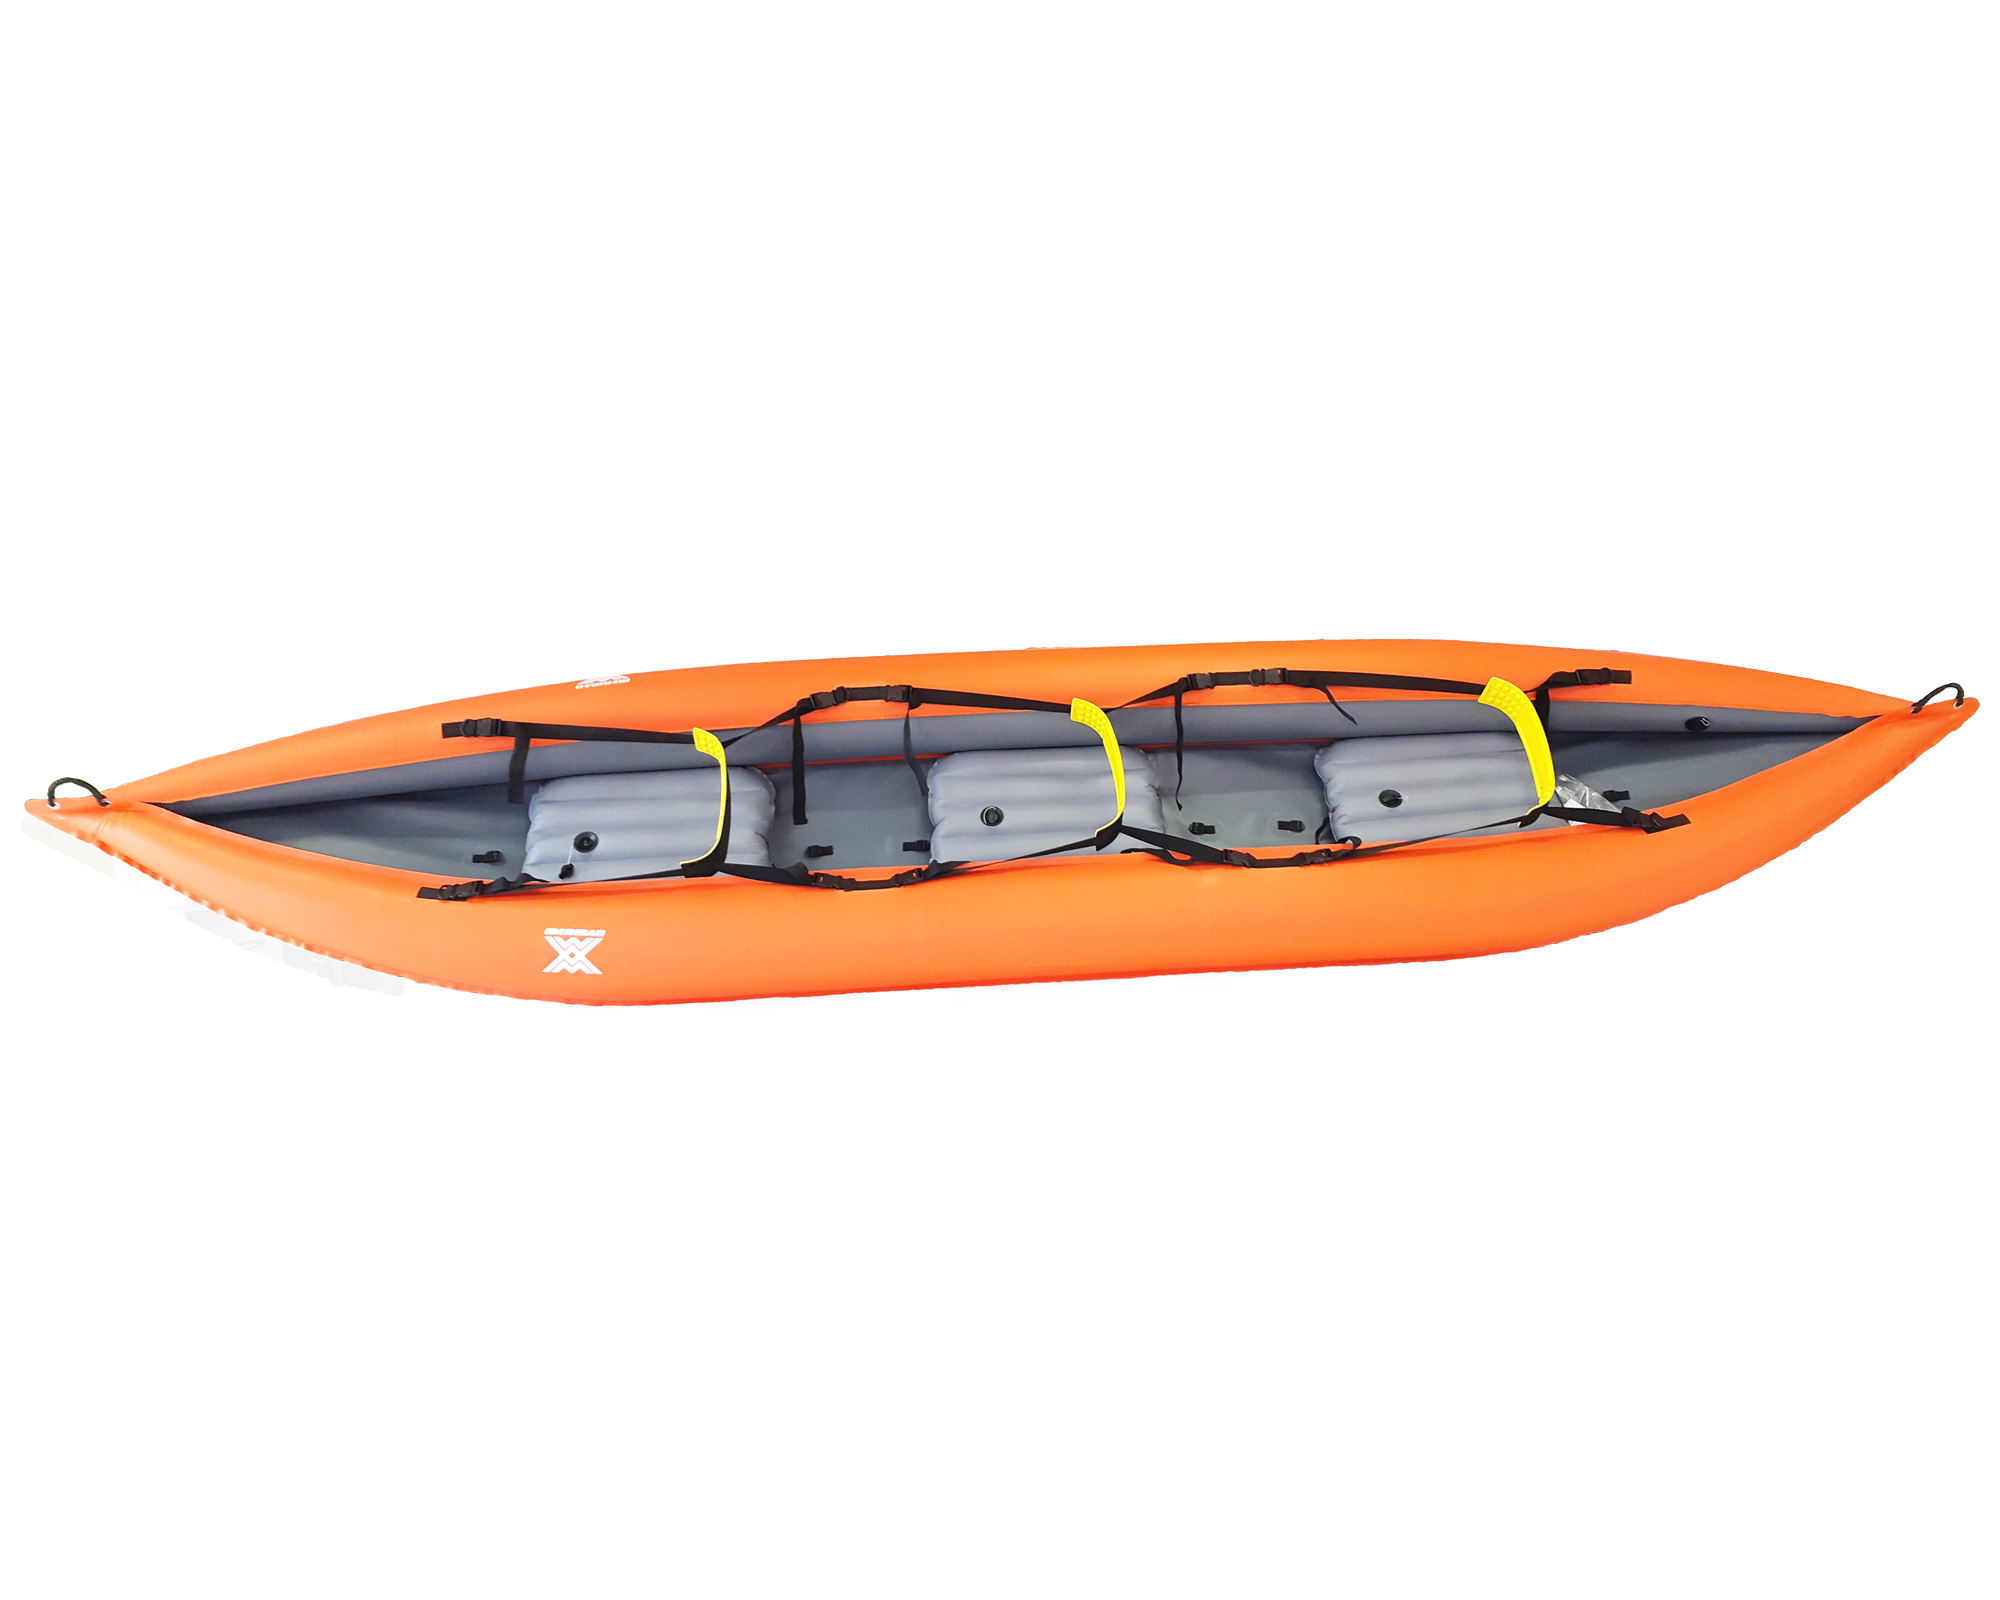 Merman 505 трёхместная байдарка, цвет оранжевый + два весла